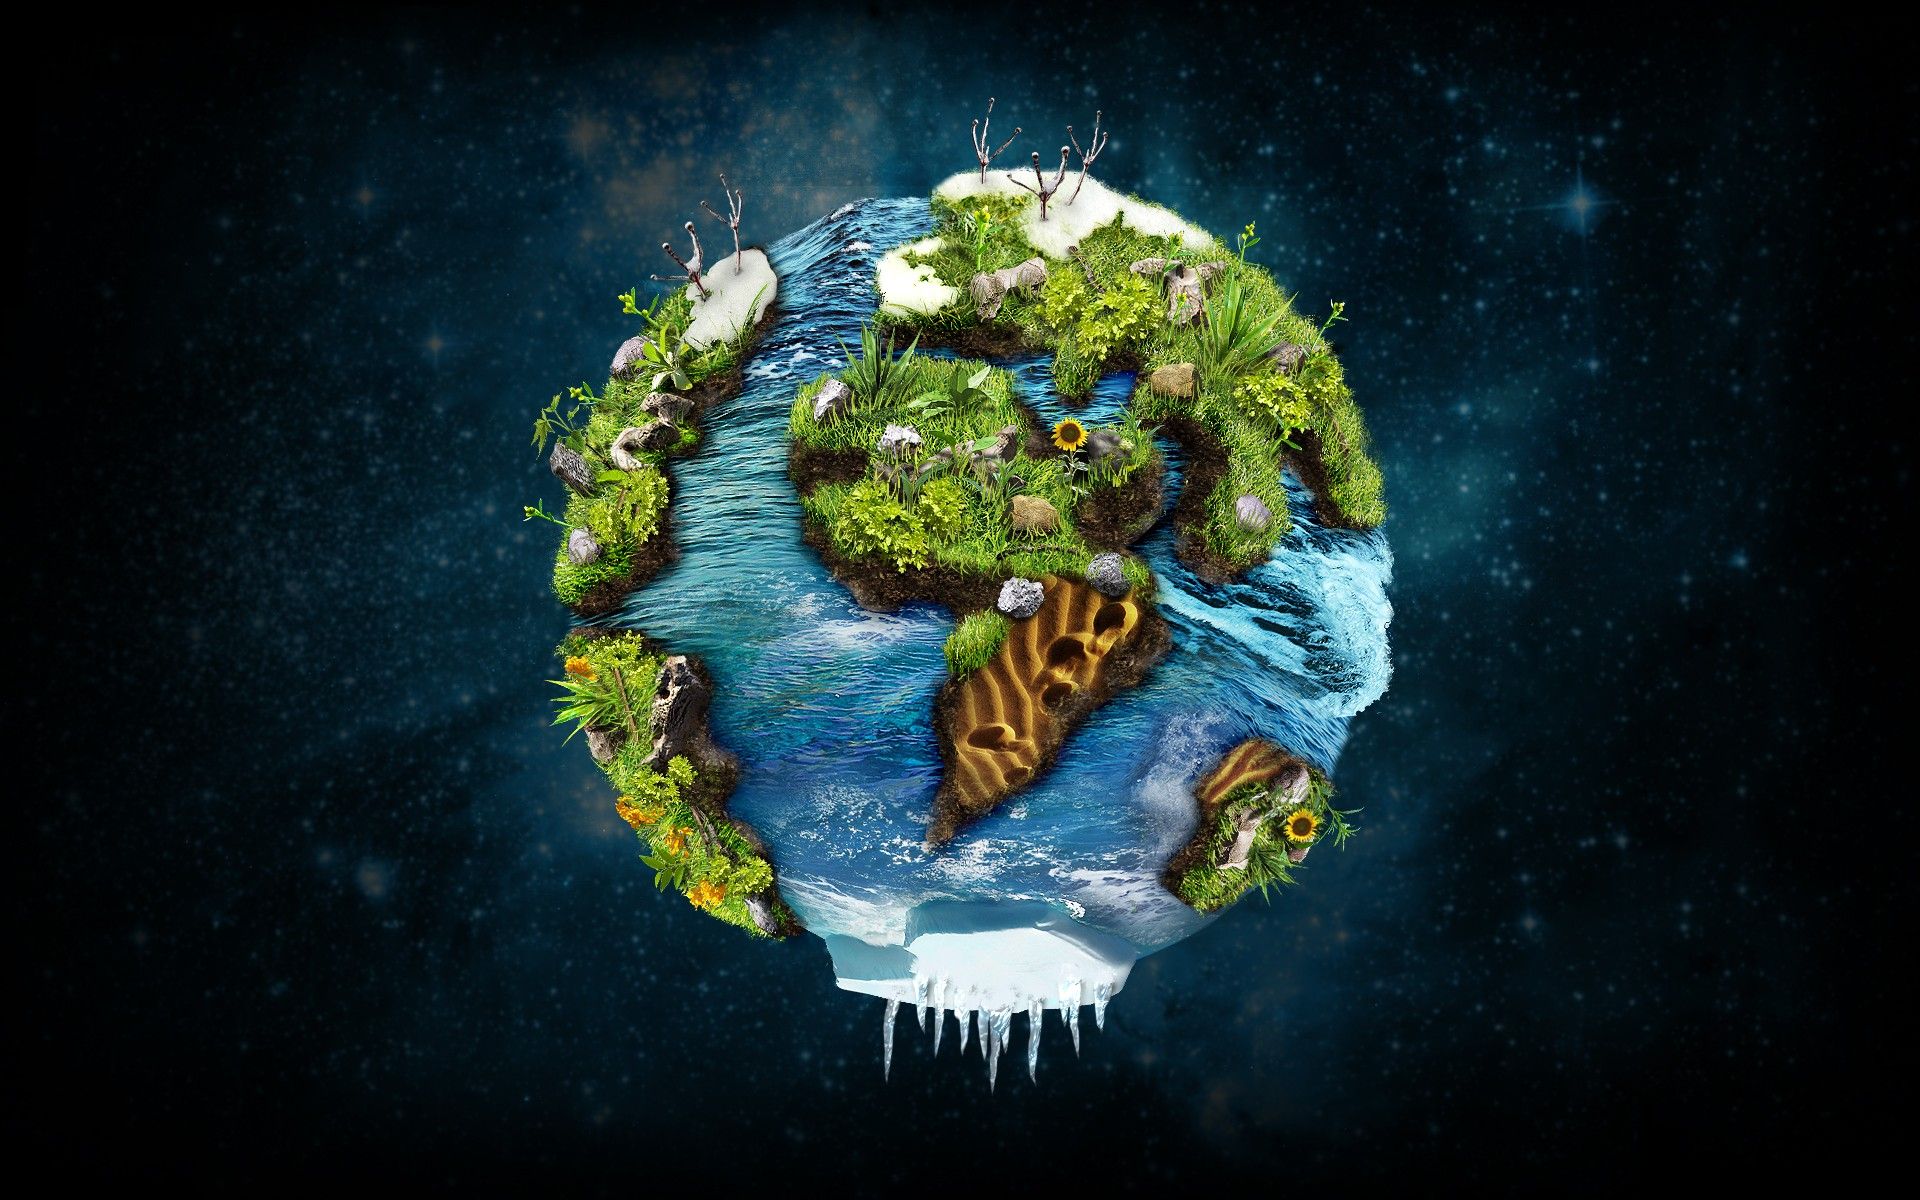 Amazing Earth HD Digital Universe Wallpaper For Mobile And Desktop